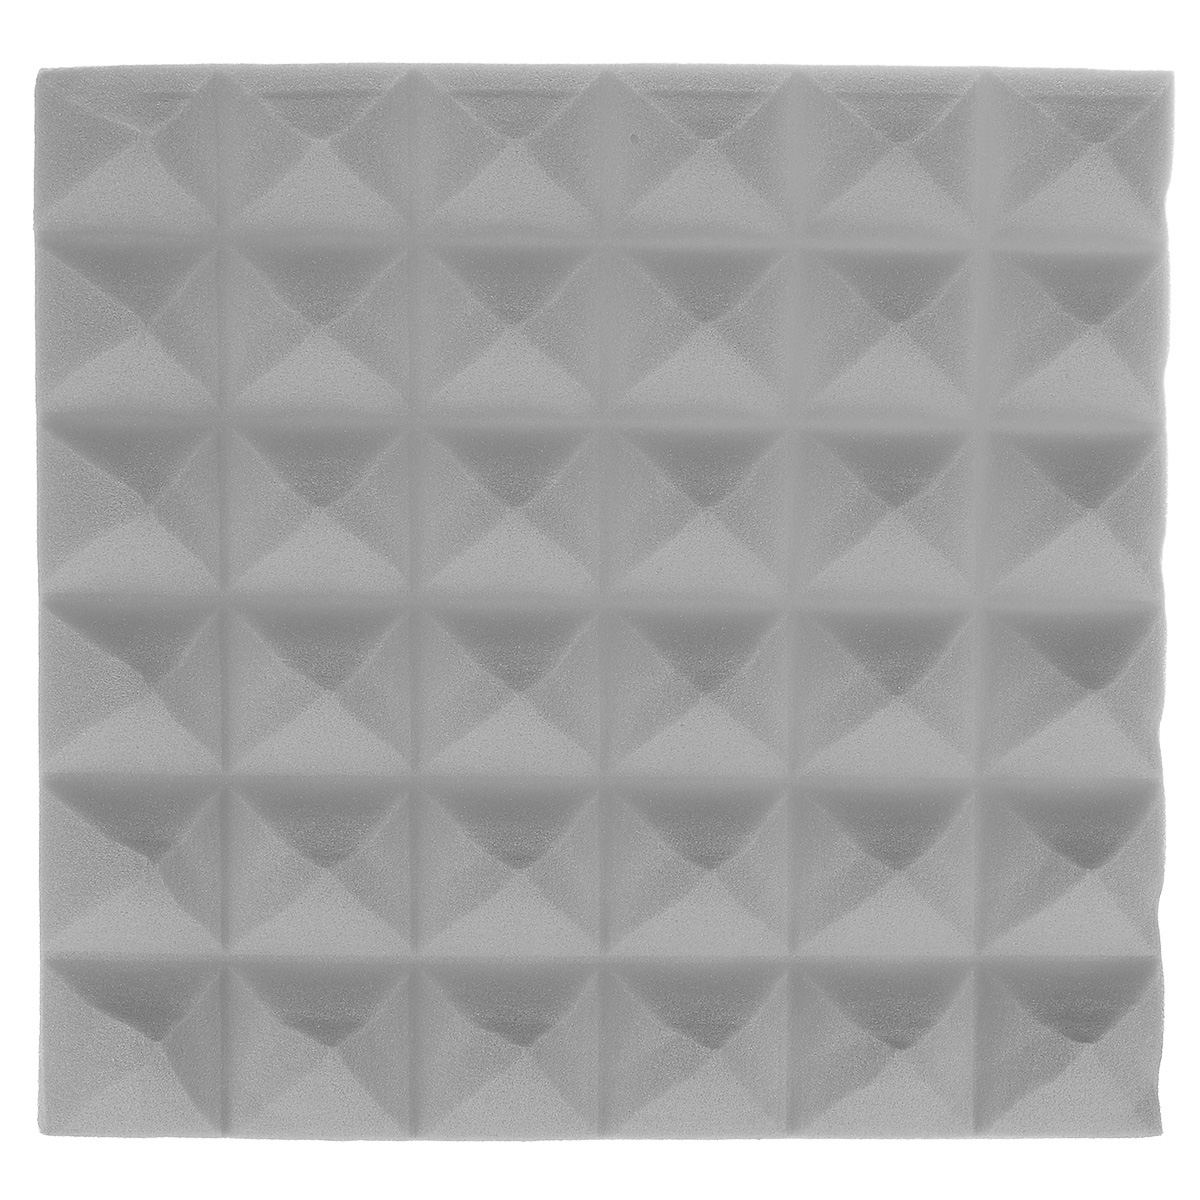 6Pcs-Acoustic-Panels-Tiles-Studio-Soundproofing-Insulation-Closed-Cell-Foam-1761605-8